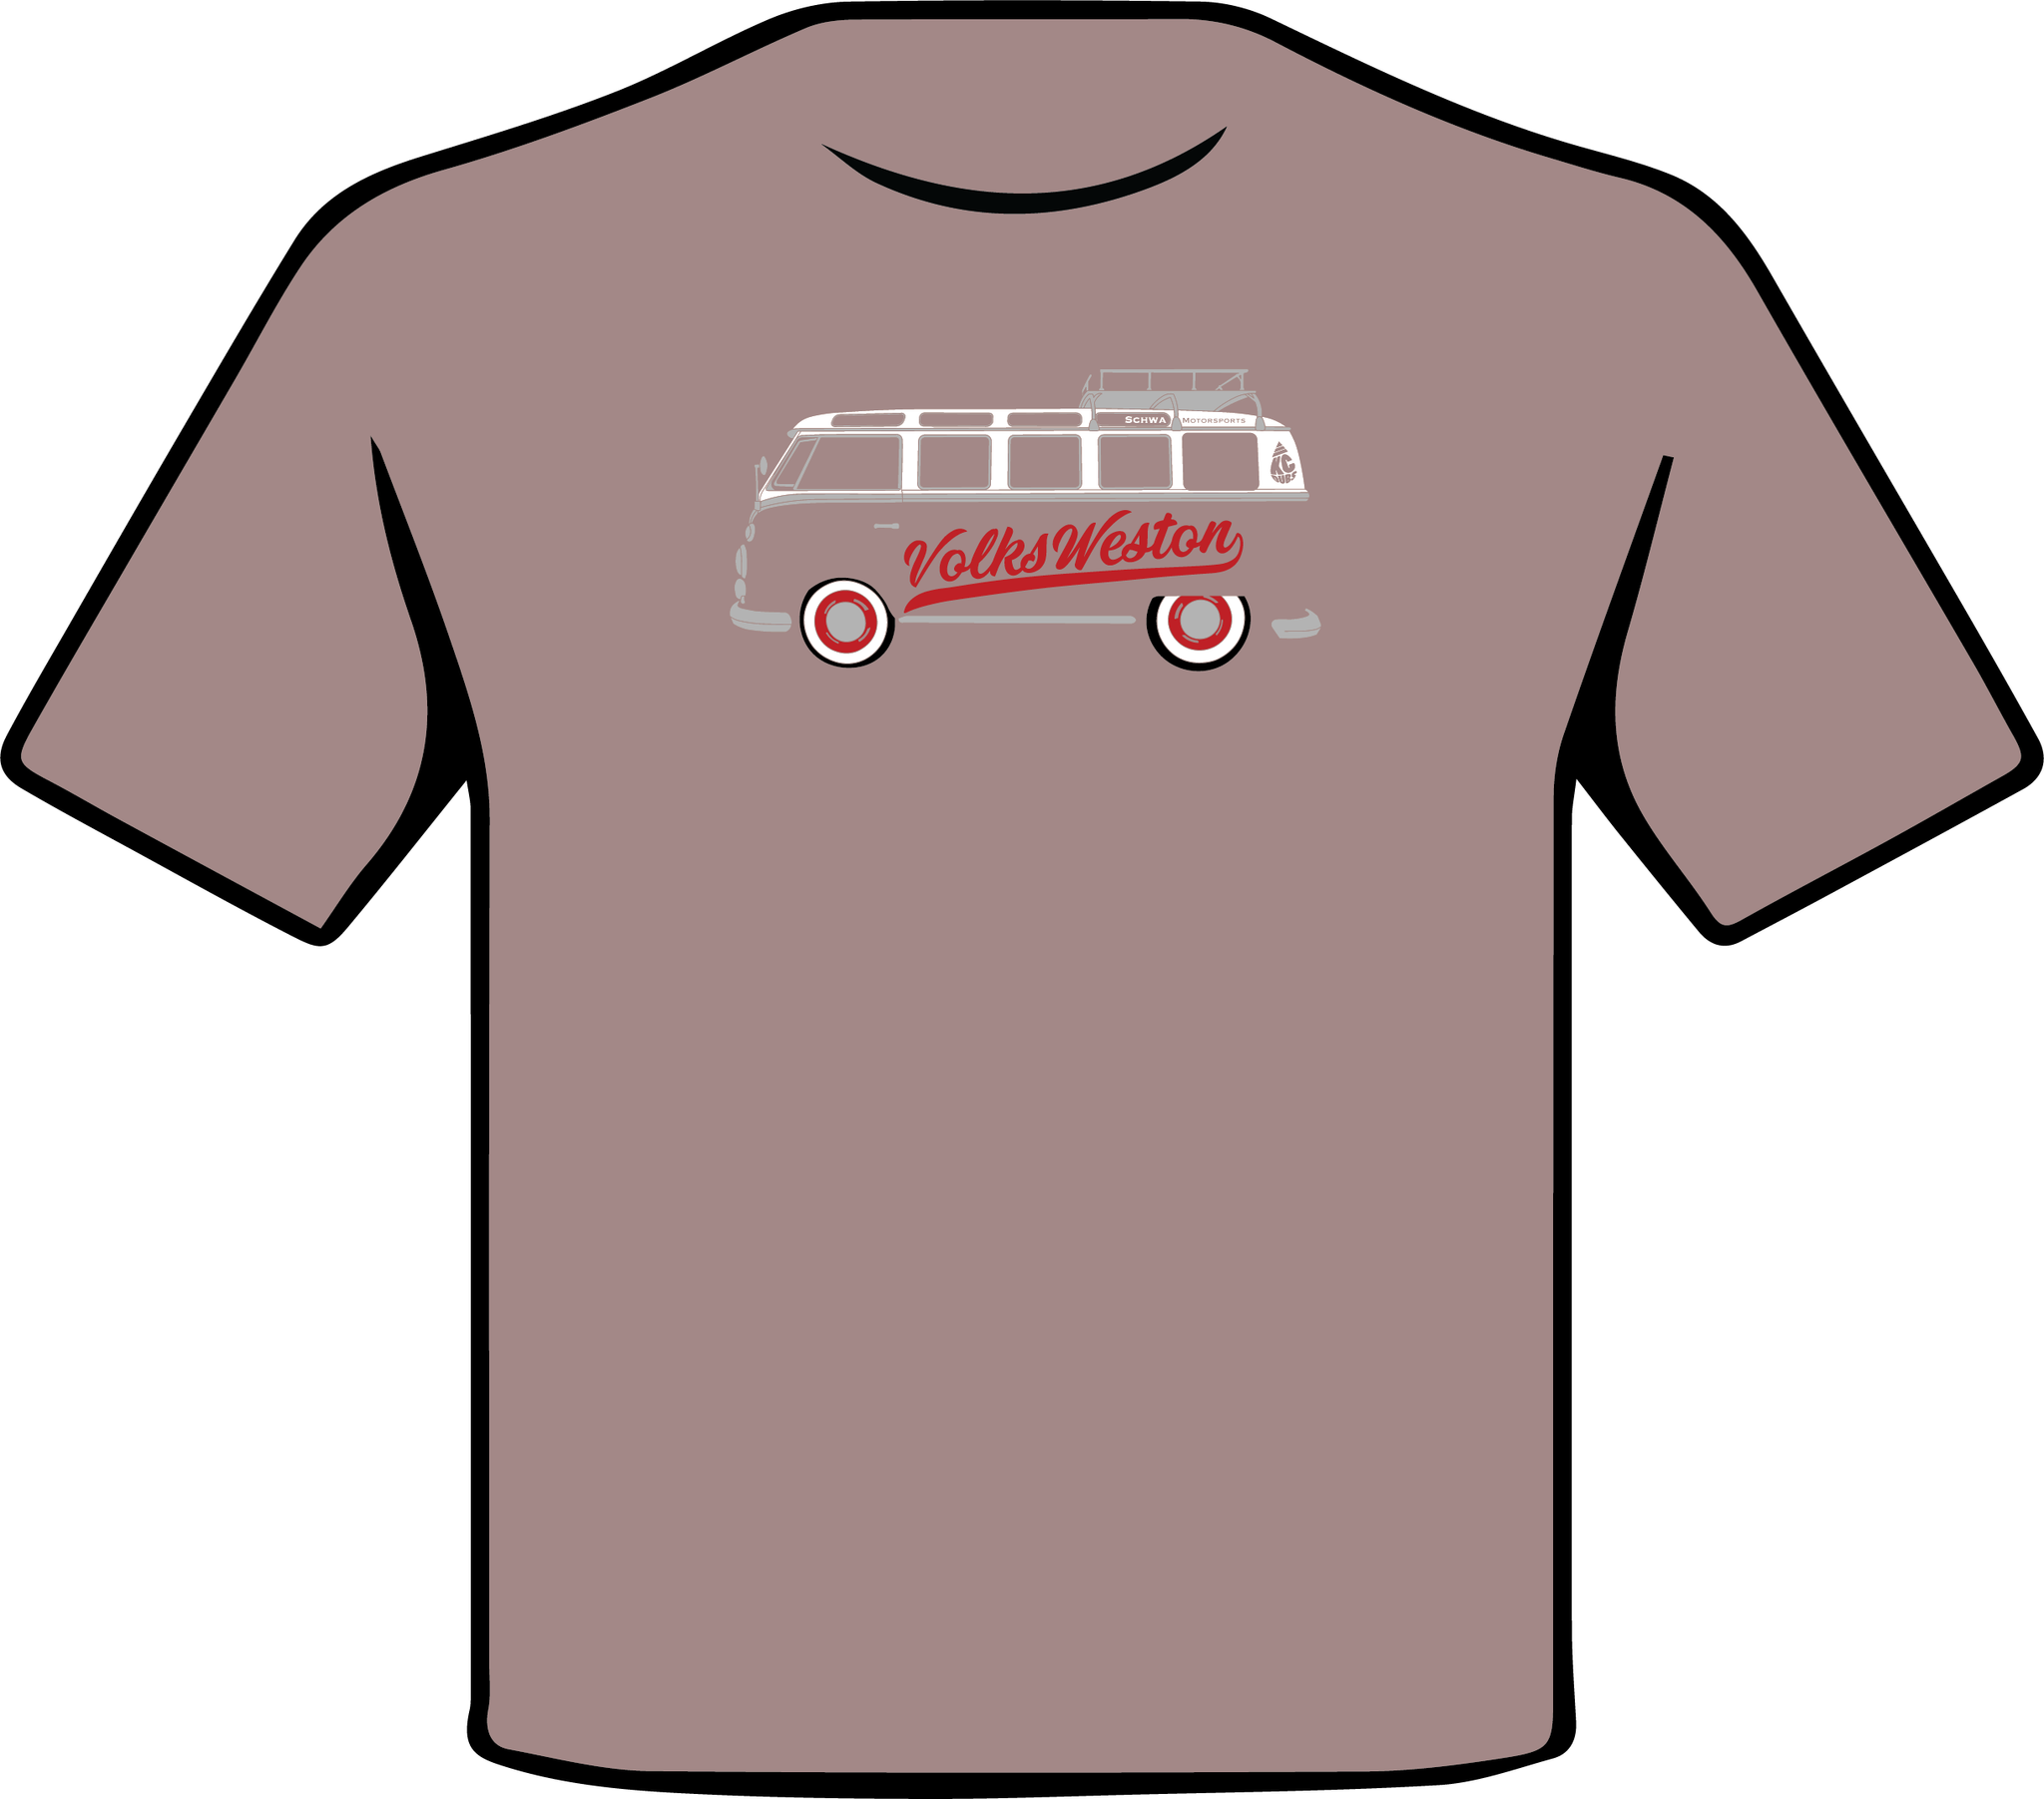 VolksWeston Show Bus Multi Color T-Shirt